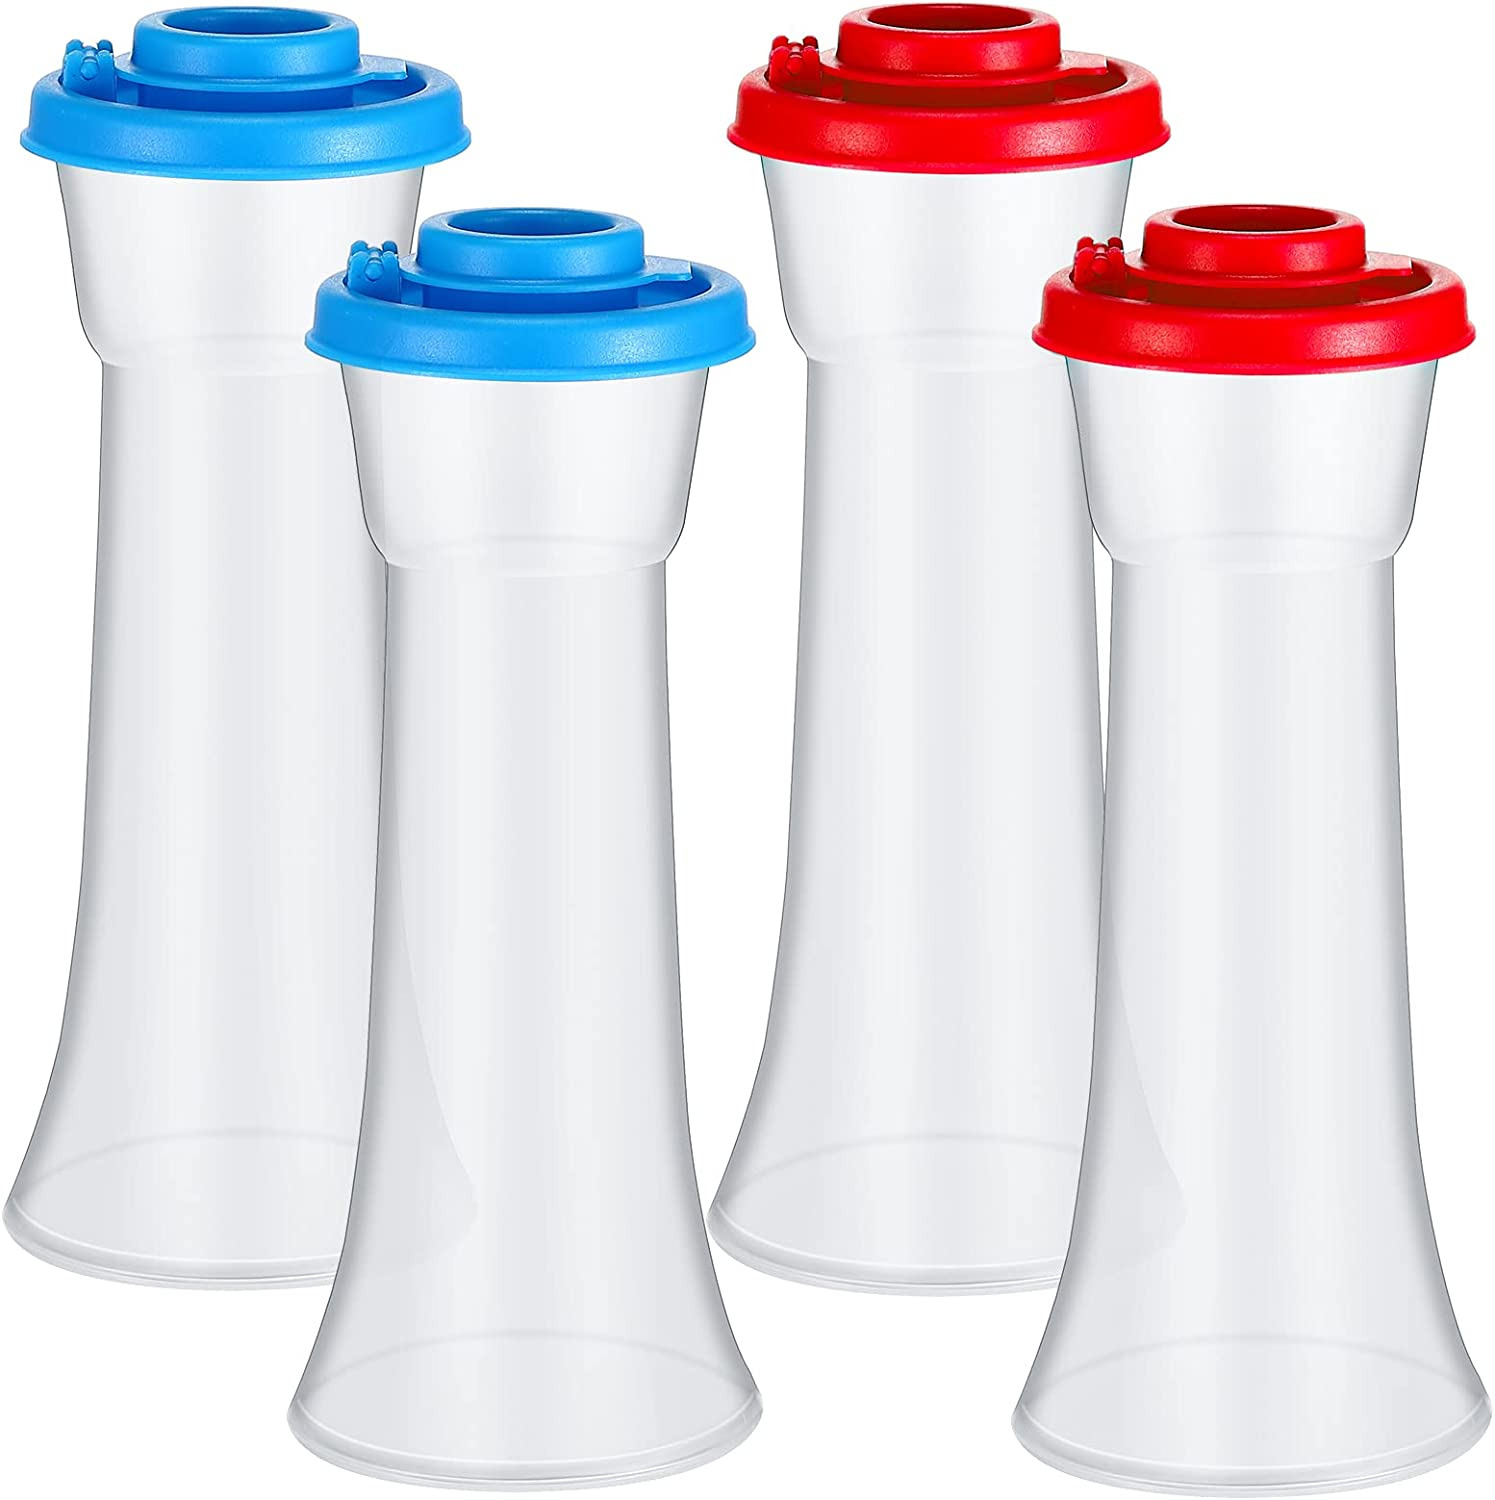 Set of 4 Plastic Salt and Pepper Shakers Hourglass Salt and Pepper Shakers with 